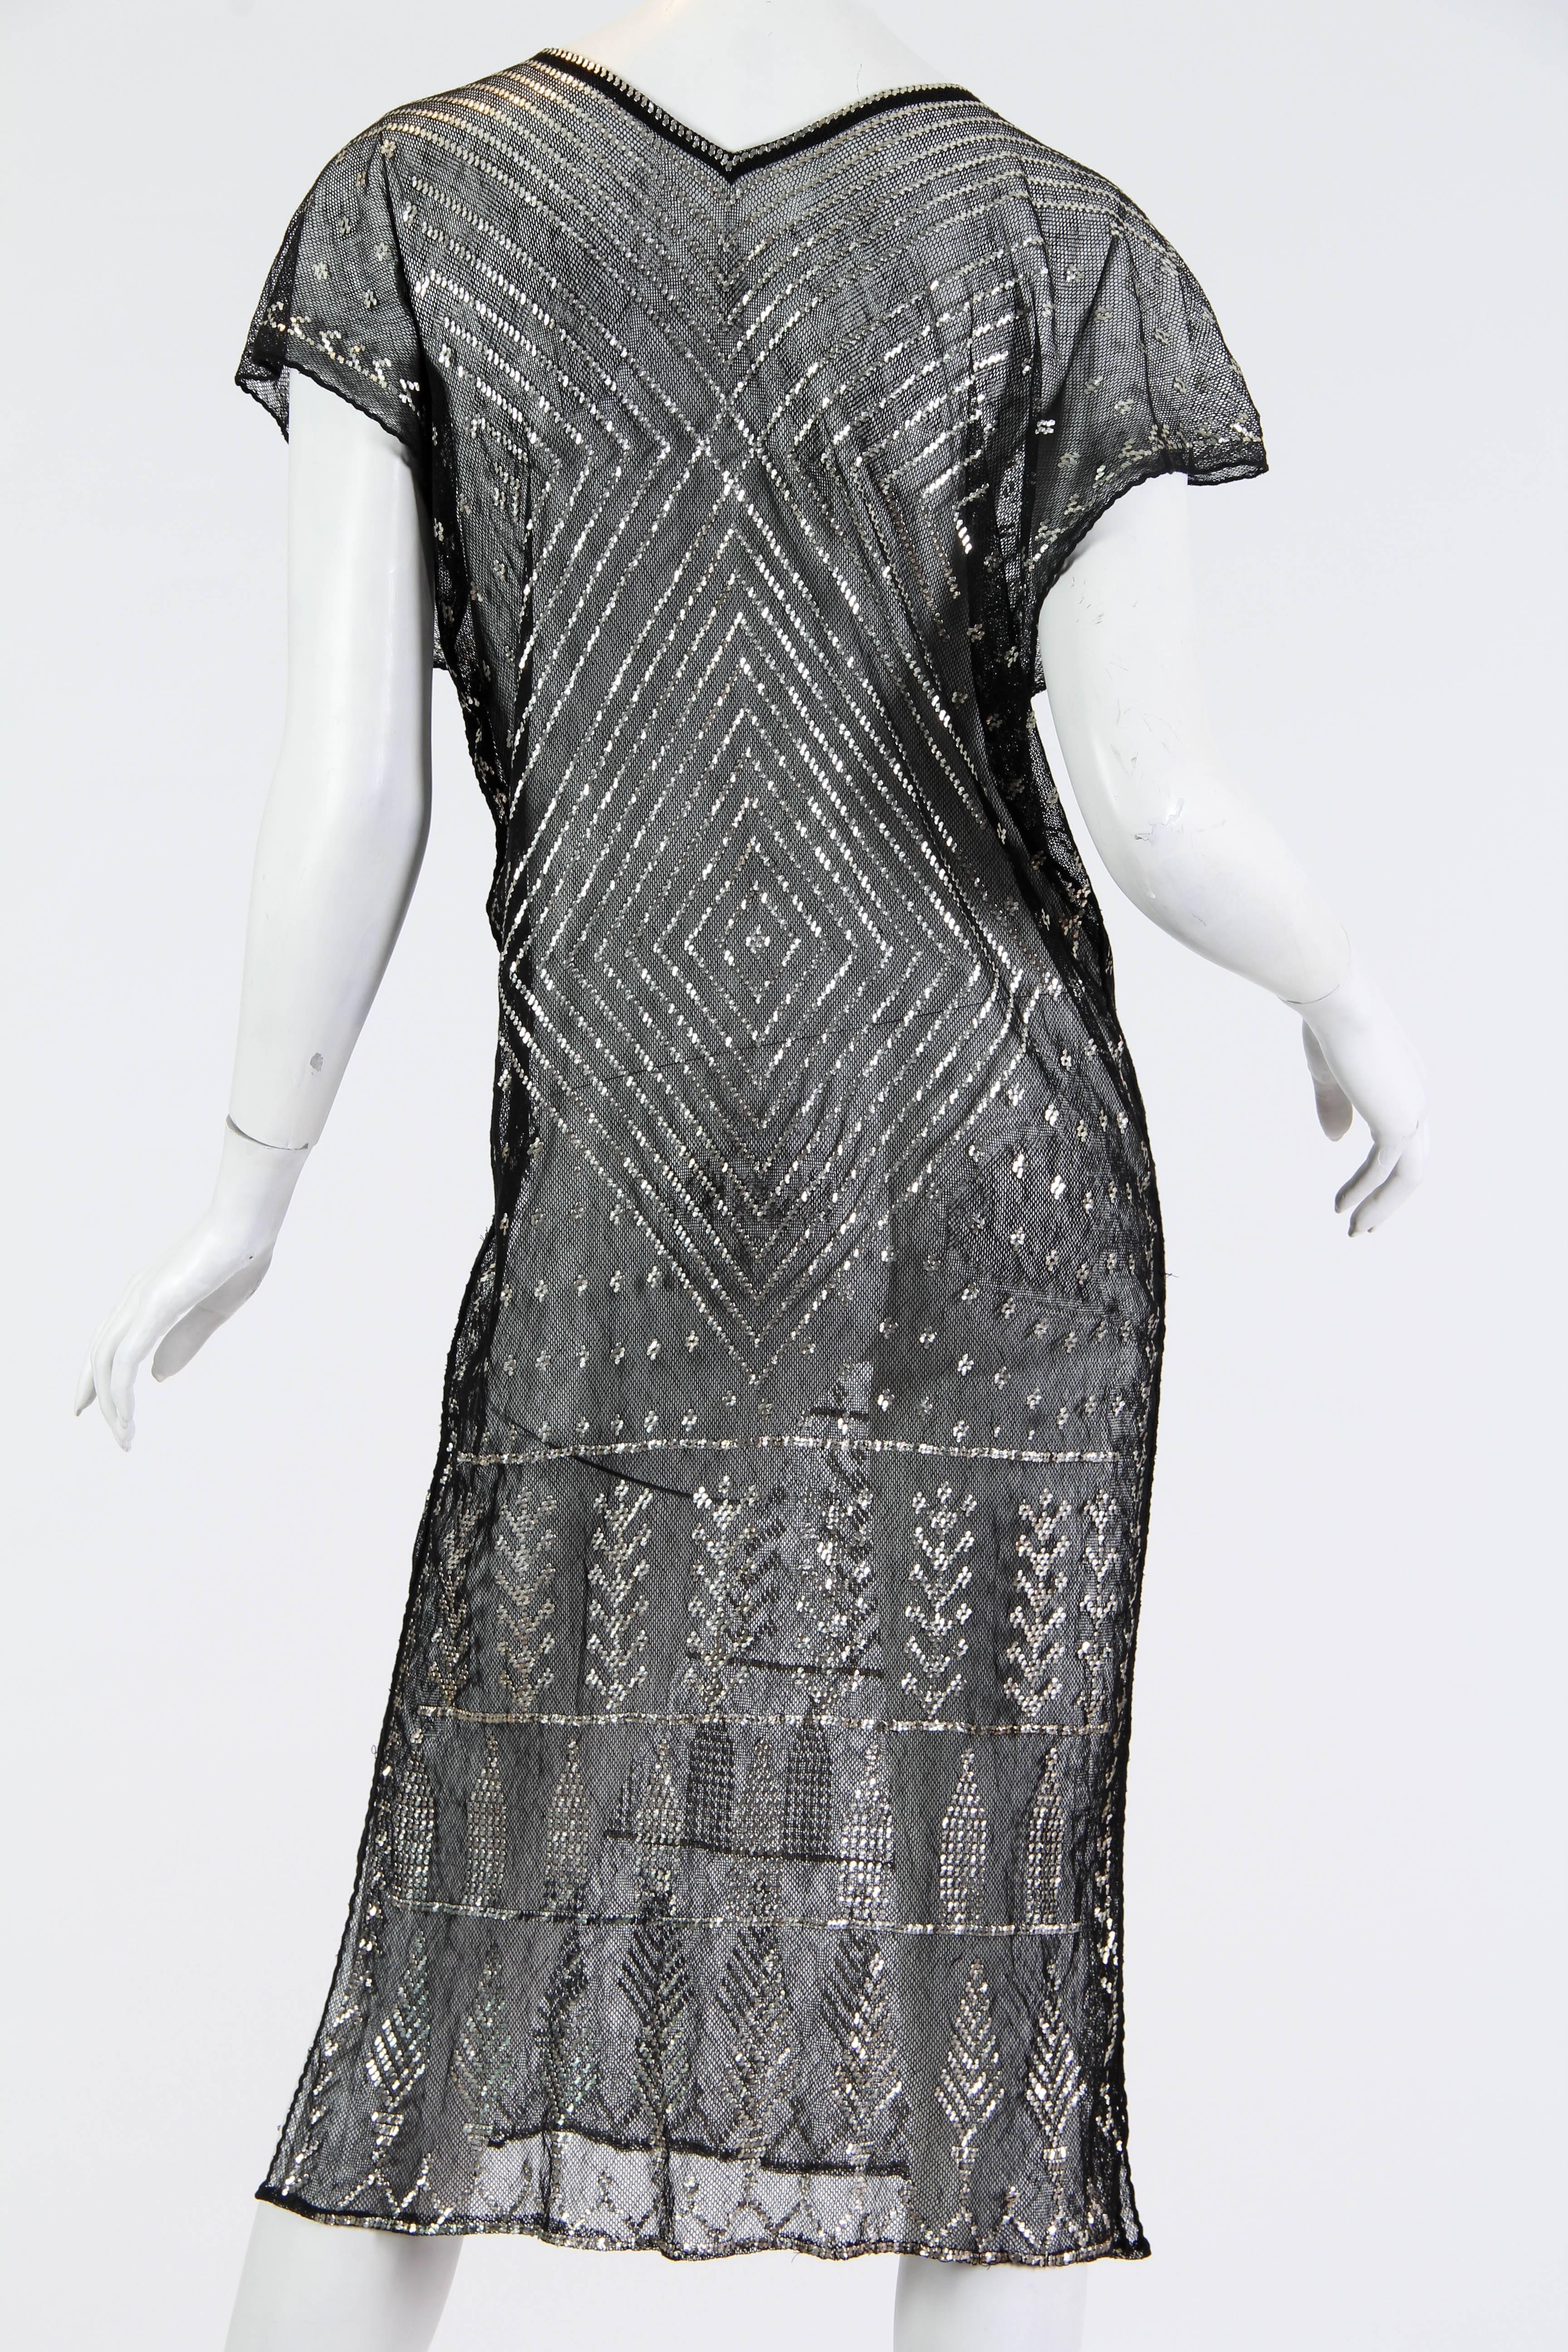 Gray 1920s Egyptian Assuit Metal and Cotton Net Dress